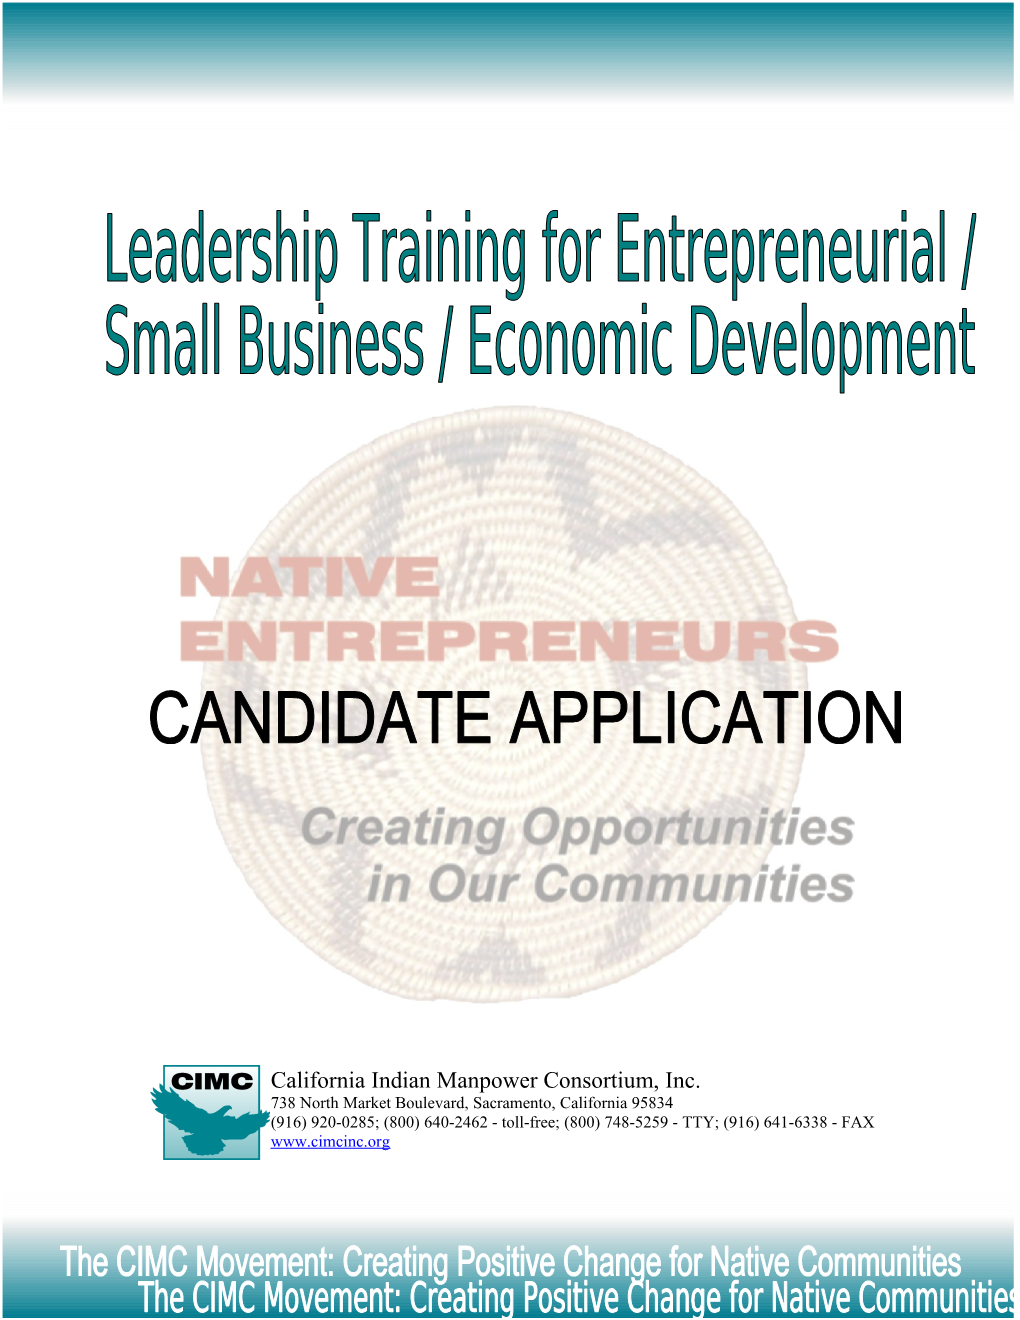 CIMC Leadership Training for Entrepreneurial / Small Business / Economic Development